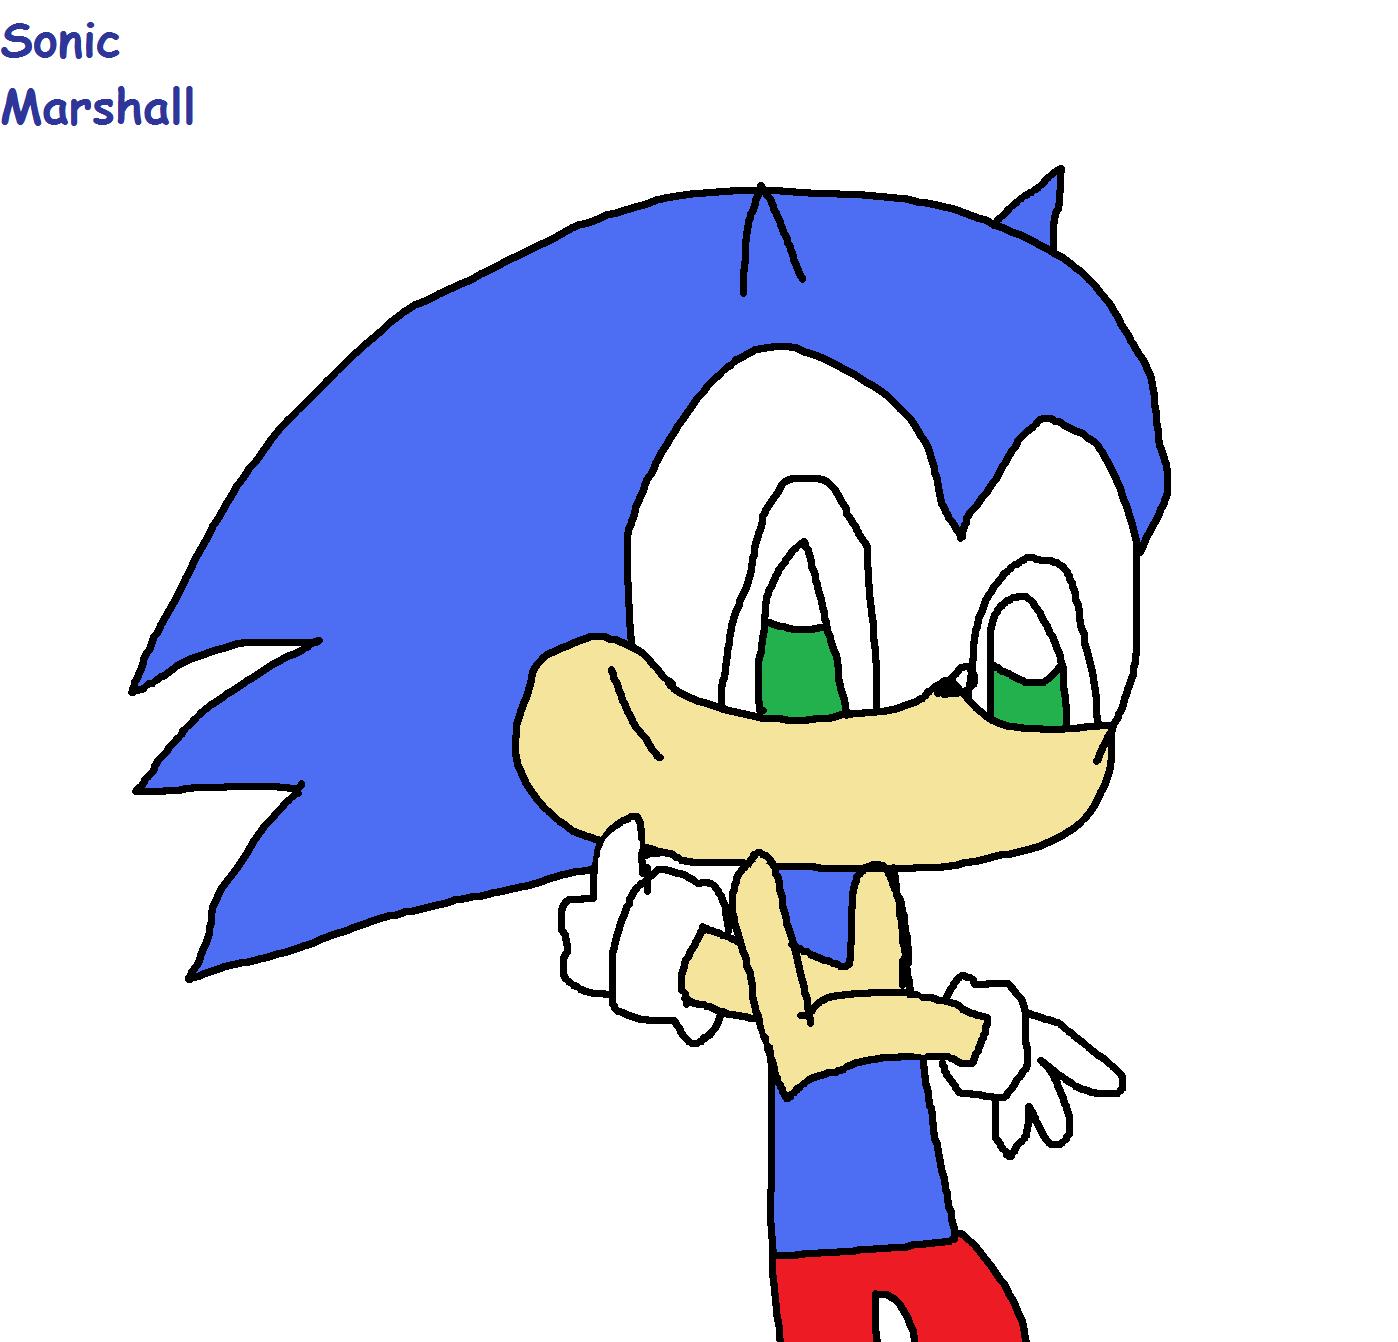 Sonic Marshall by MattHawk12